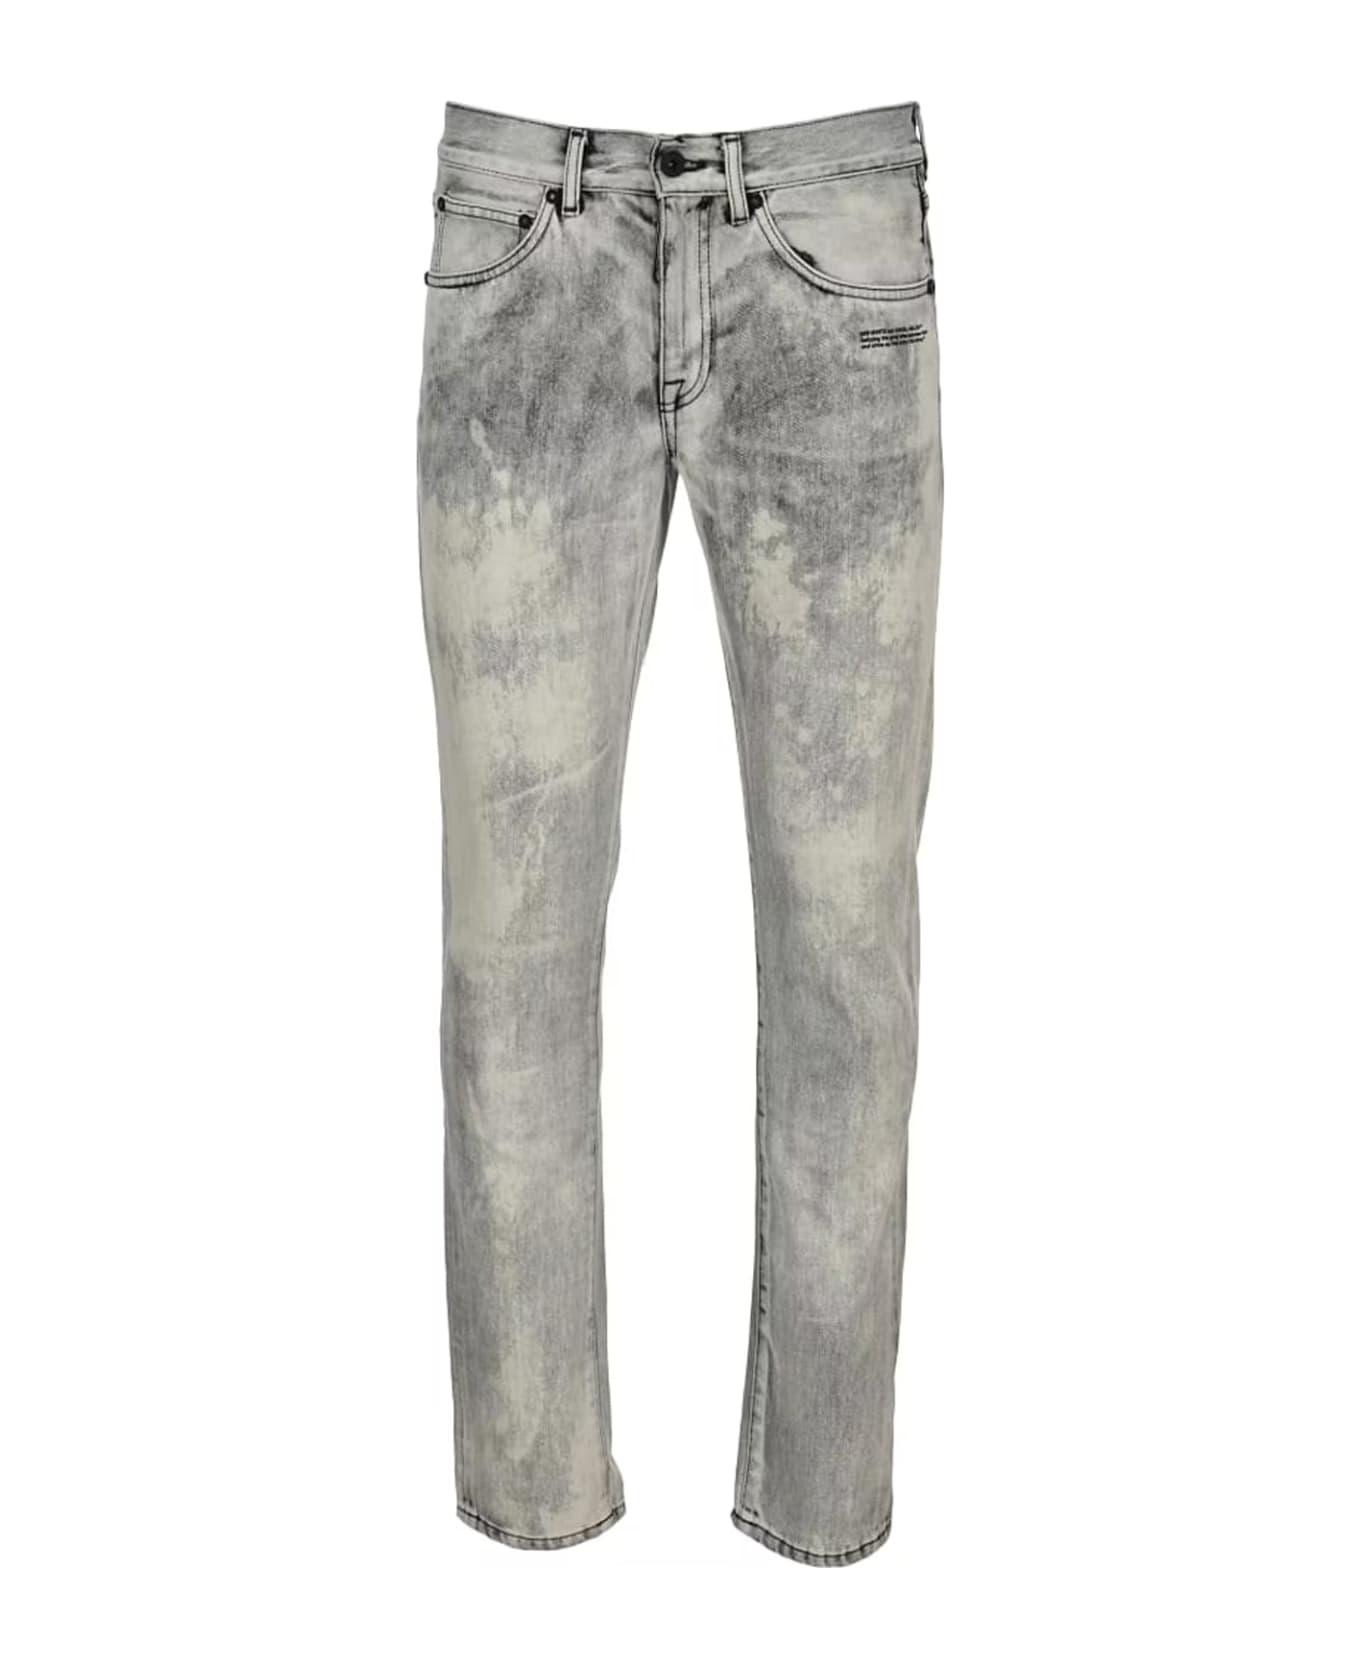 Off-White Cotton Denim Jeans - Gray